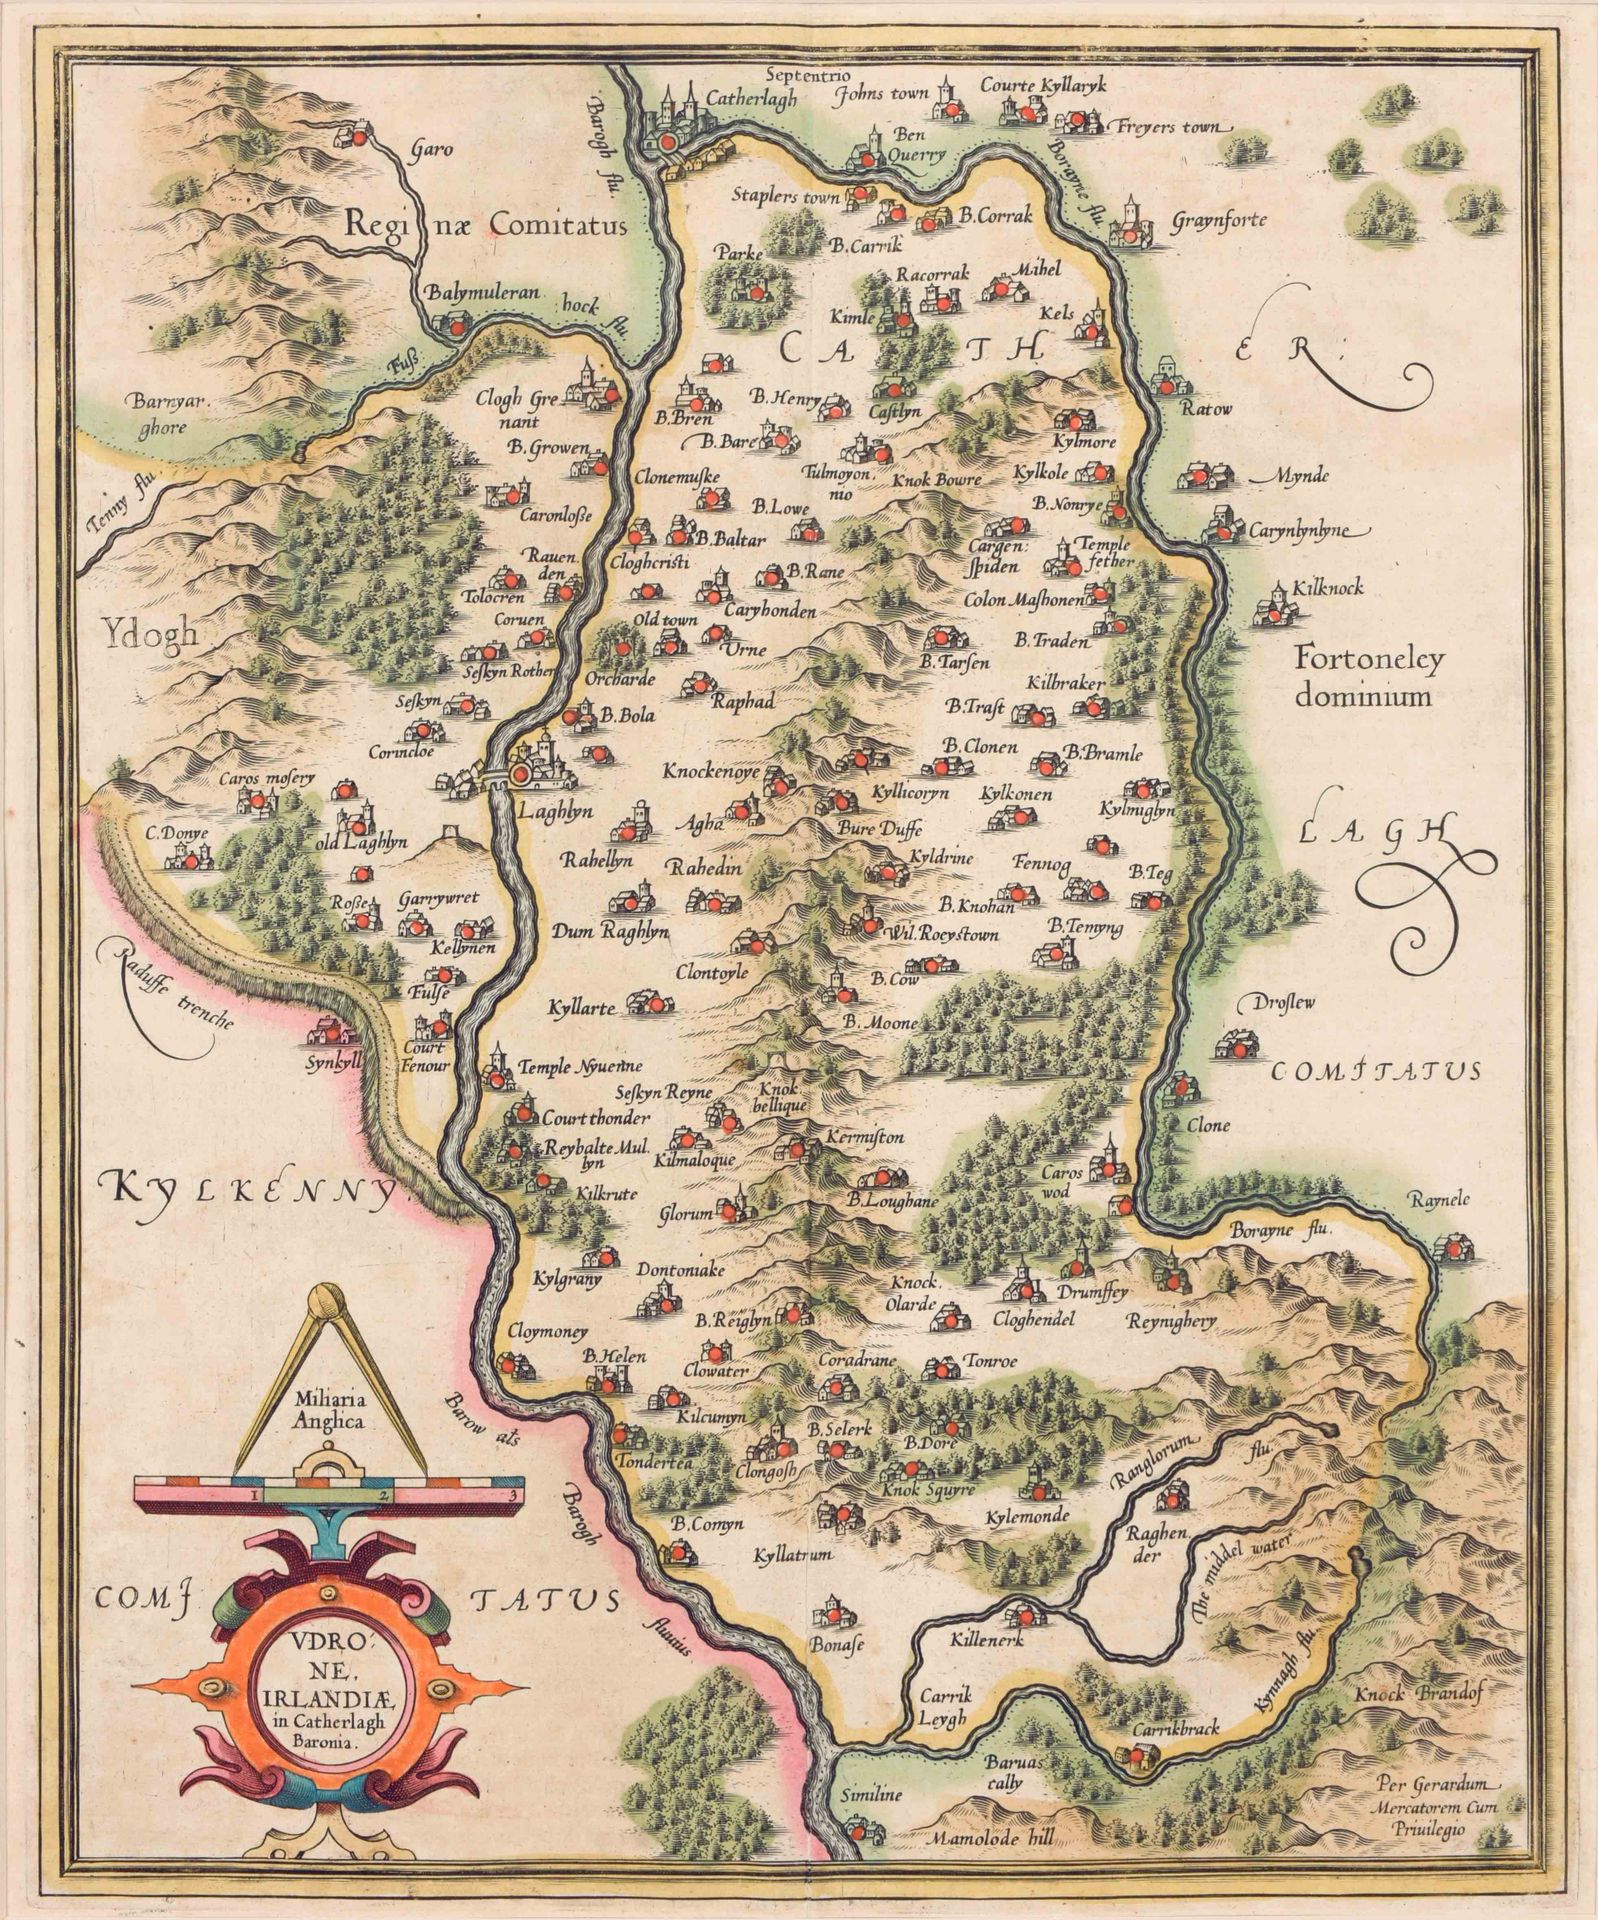 [IRELAND] Udrone. Irlandiae en Catherlagh Baronia (Carlow)

Mapa original engr. &hellip;